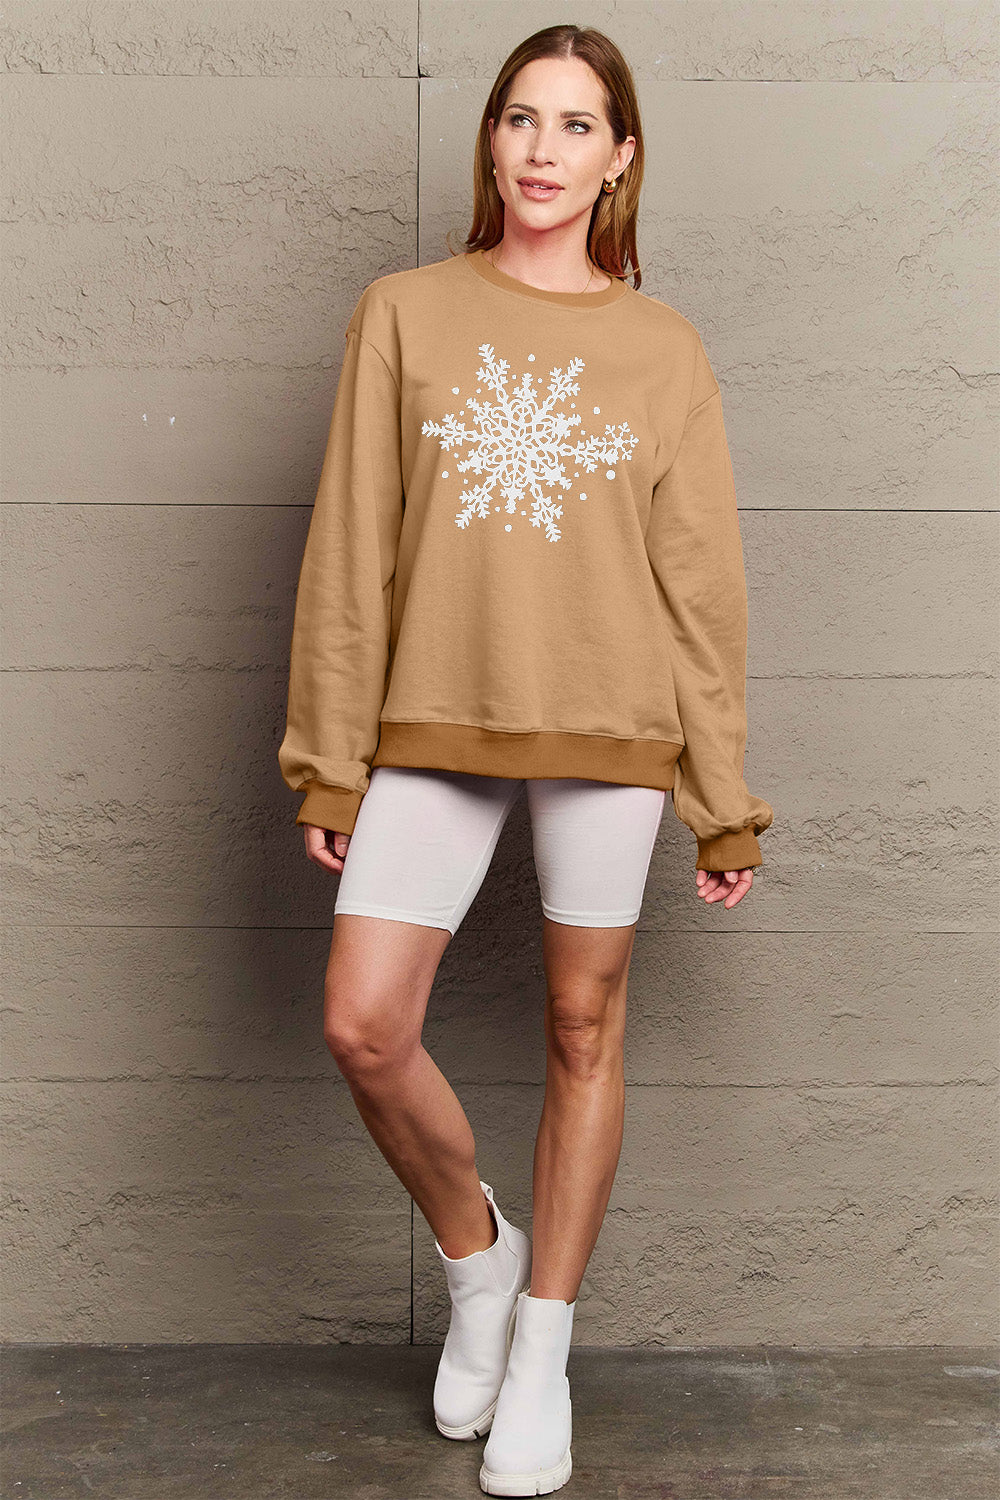 Snowflake Graphic Sweatshirt - 5 colors